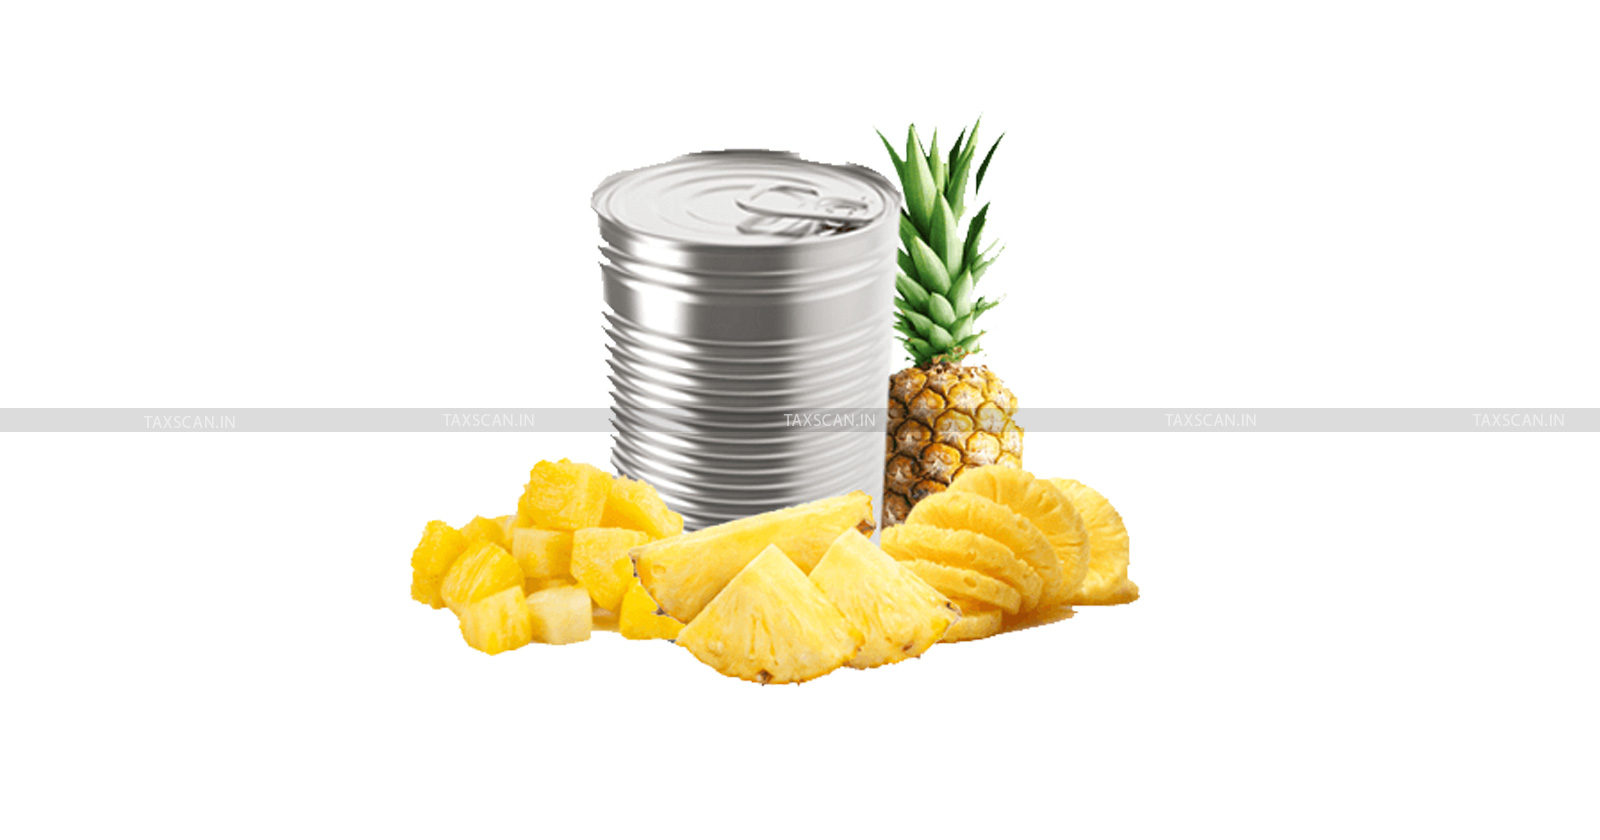 CESTAT - Bills of Entry - cestat kolkata - canned pineapple - TAXSCAN